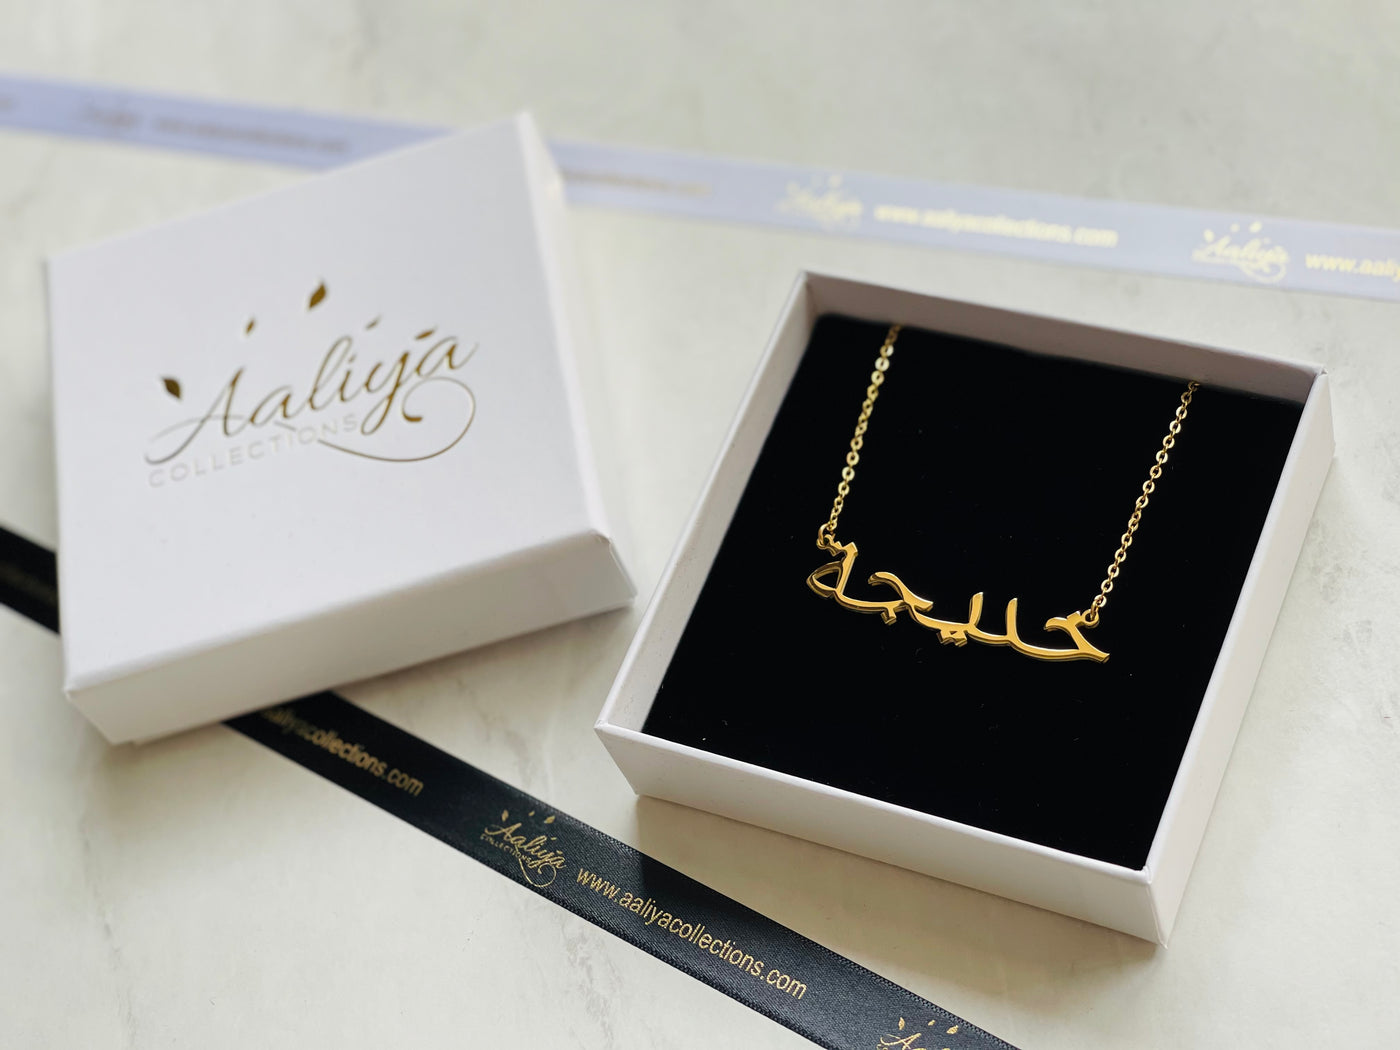 Arabic Name Necklace - KHADIJAH | خدیجة